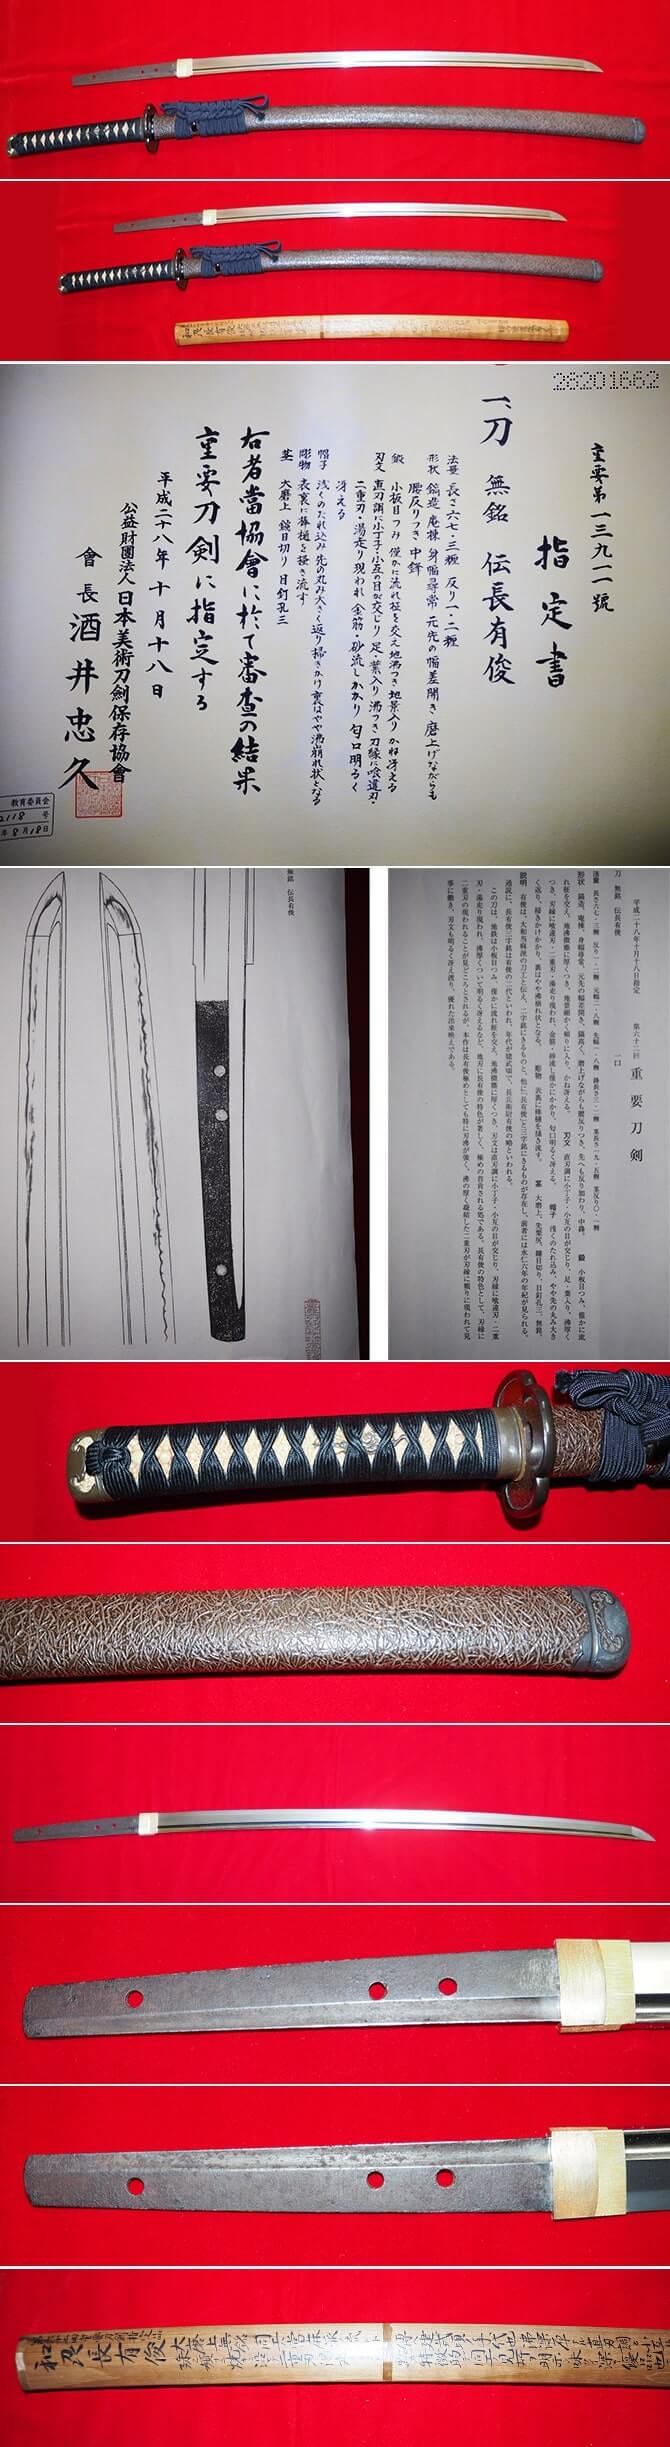 刀31-02　重要刀剣　第六十二回　伝　長有俊（大和） 鎌倉末期（AD1302〜）JYUYO TOUKEN NO.62　DEN CHOARITOSHI YAMATO KAMAKURA MATSUKI